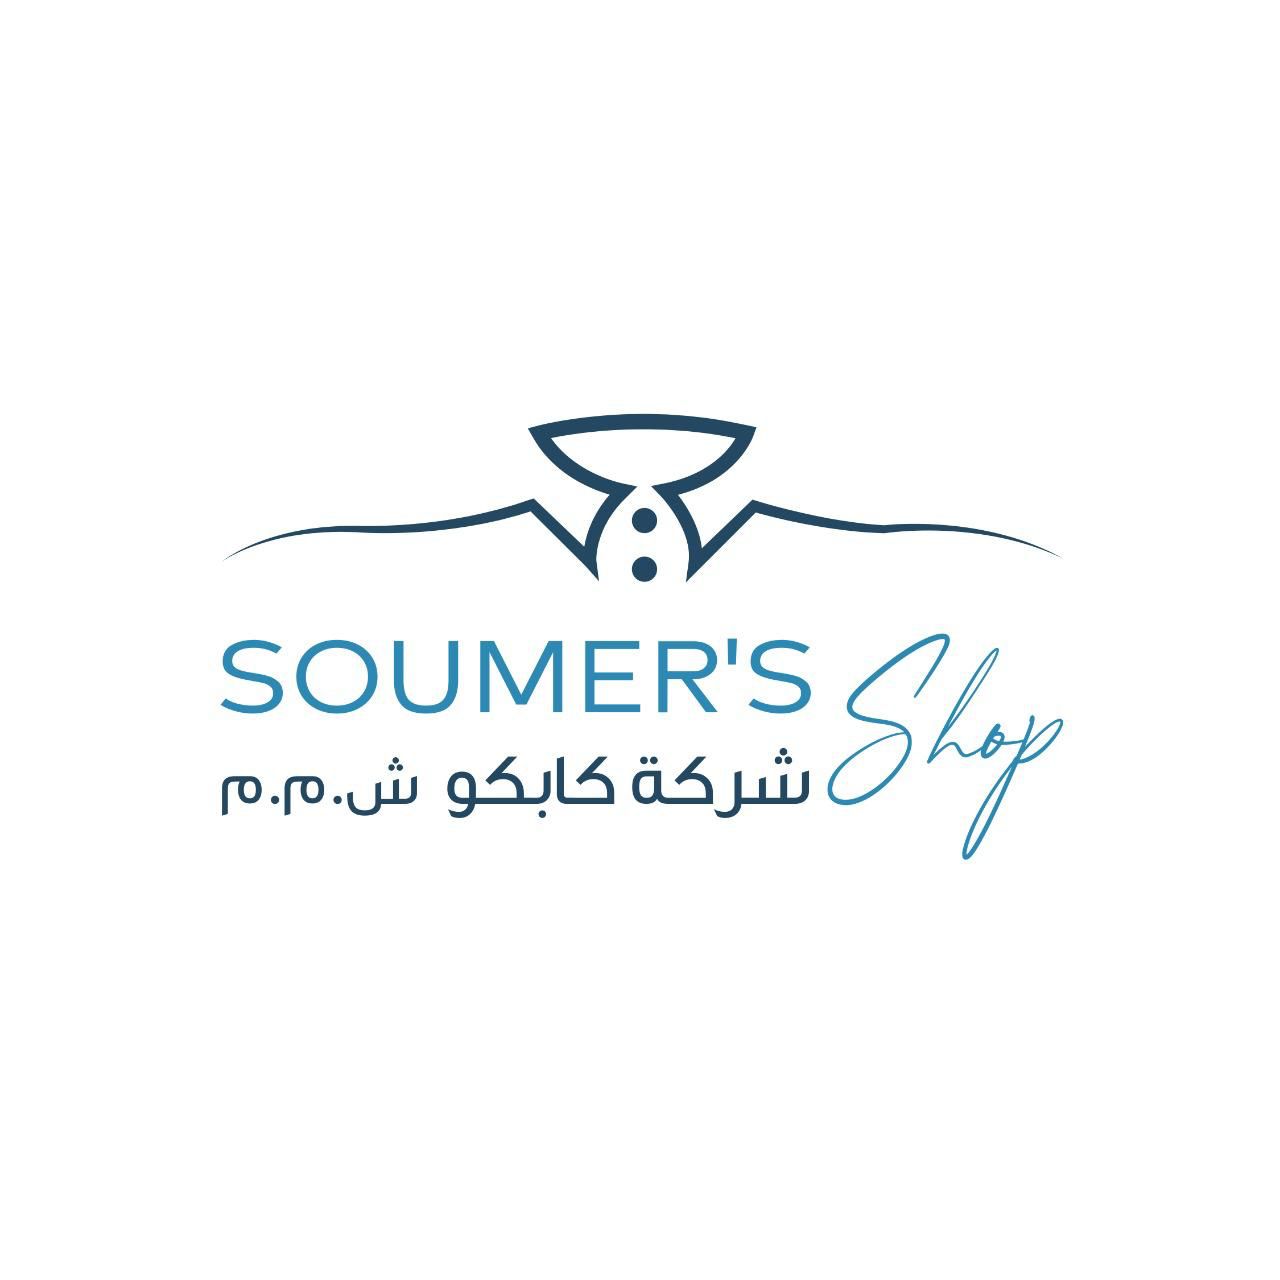 Soumer's Shop